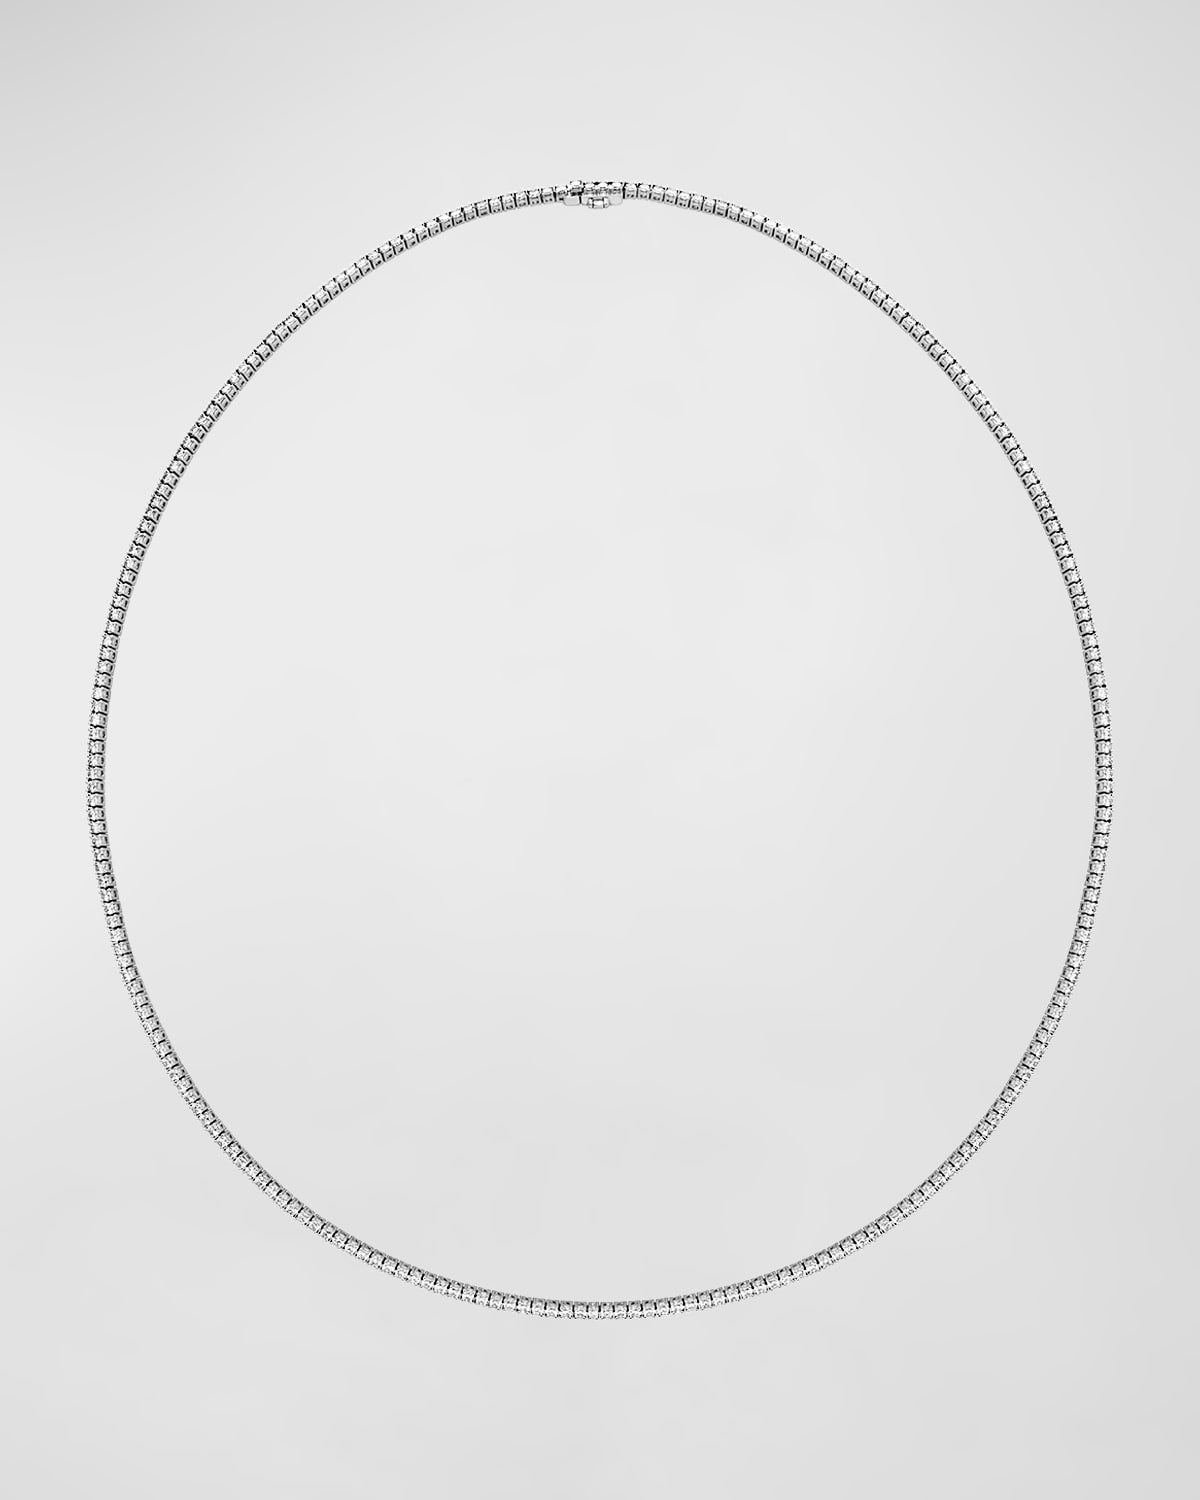 18k White Gold 4-Prong Diamond Line Necklace, 16.5"L